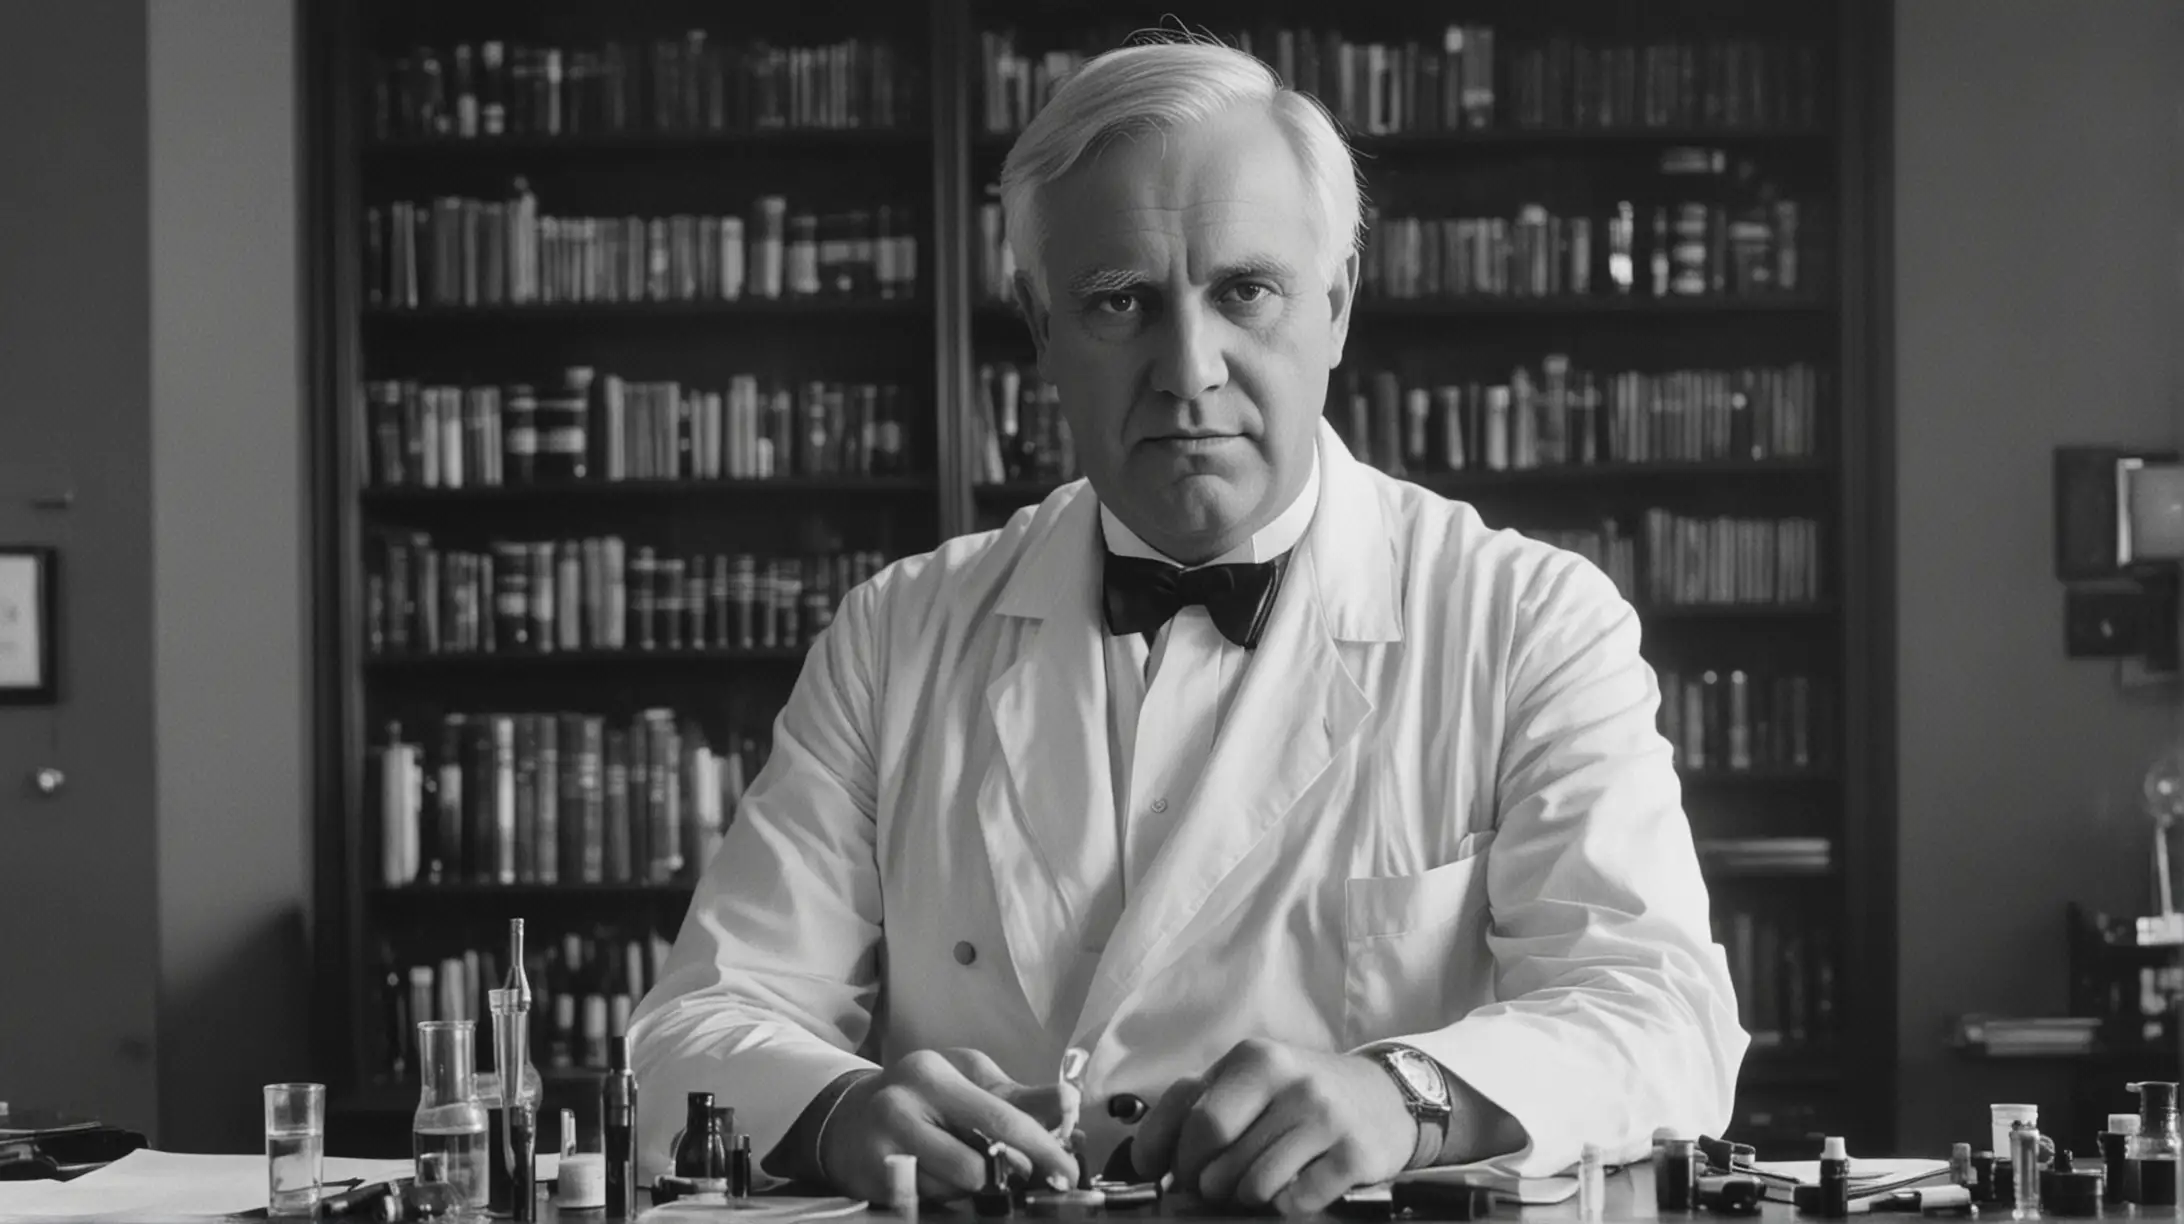 Alexander Fleming

